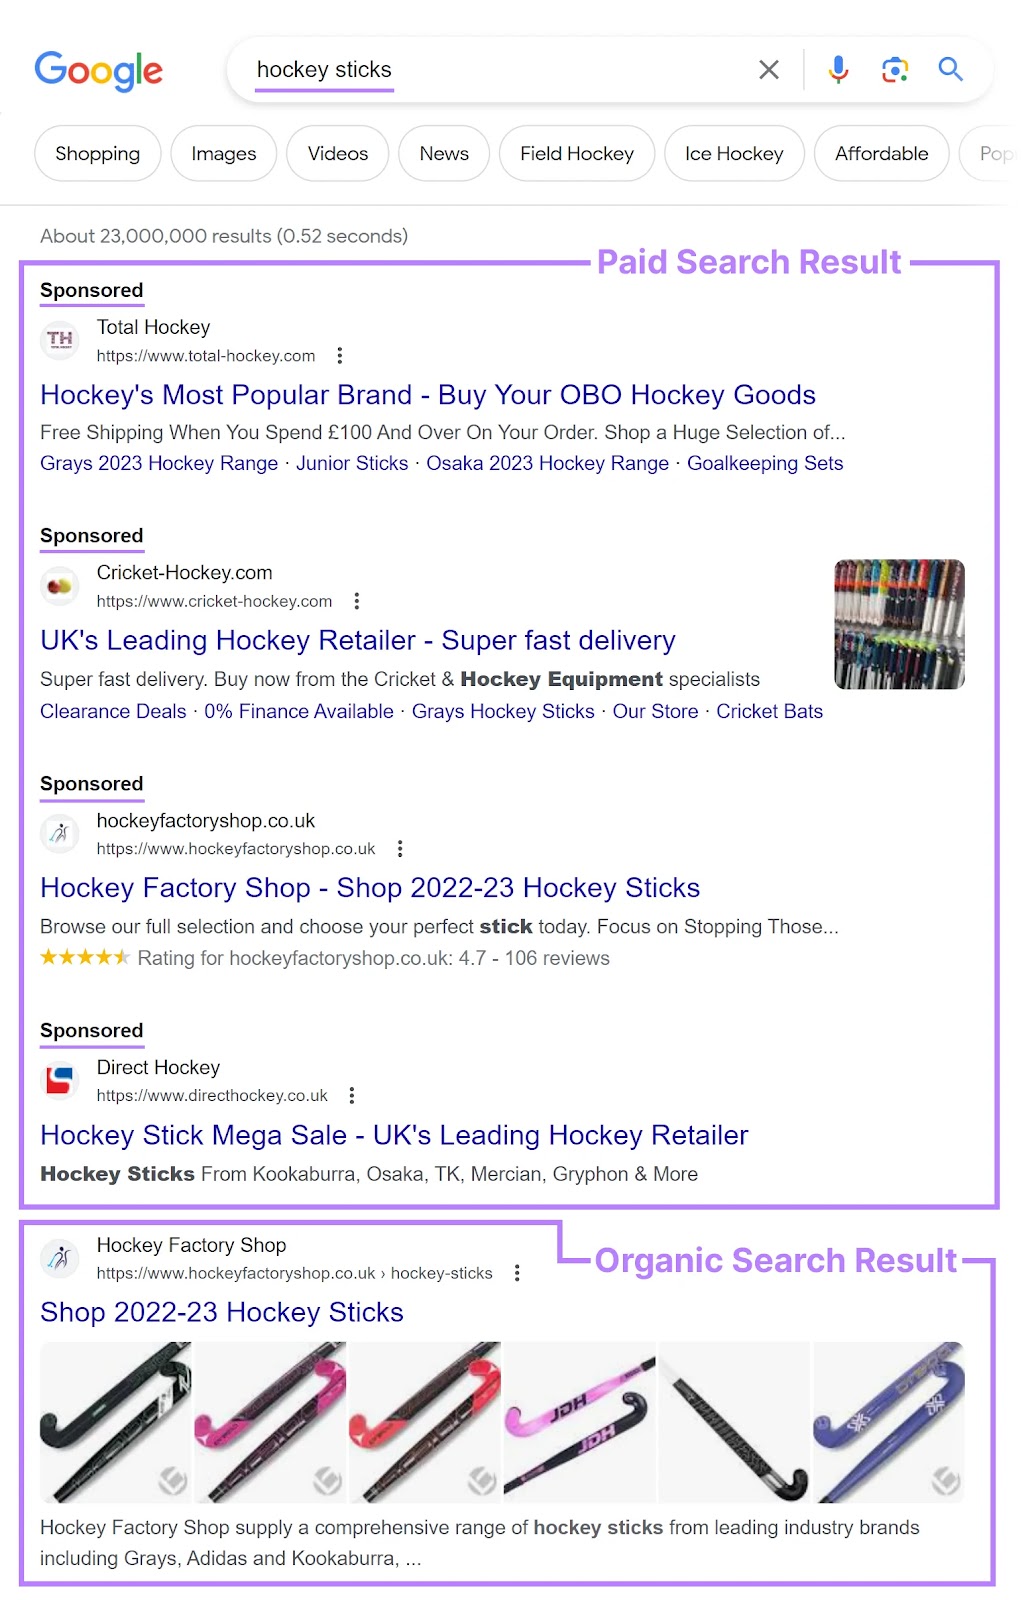 Google's SERP for “hockey sticks” query